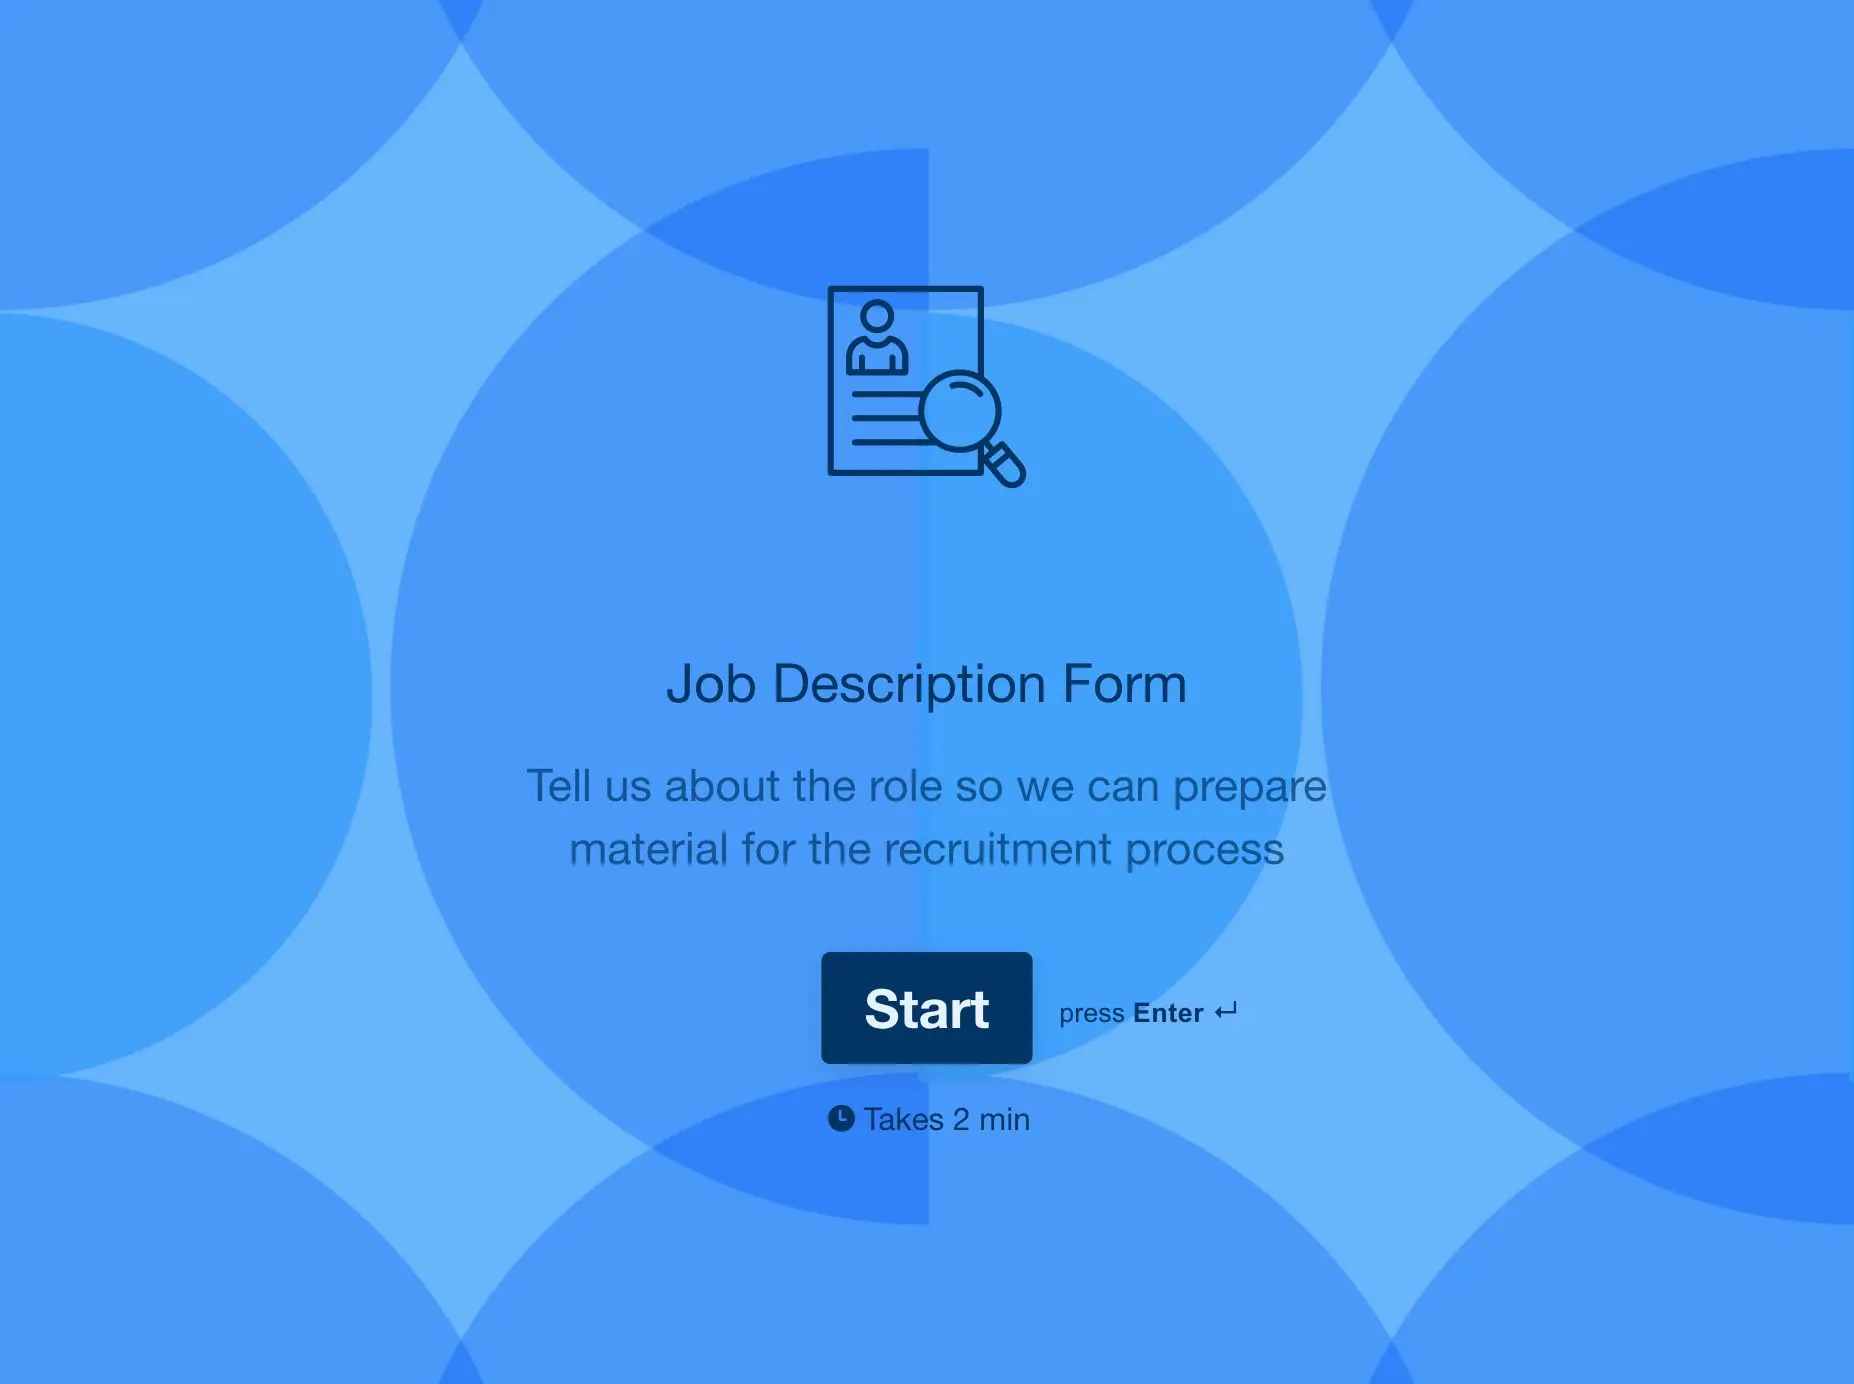 Careers - Latest Jobs, Recruitments and Vacancies - HeroFinCorp